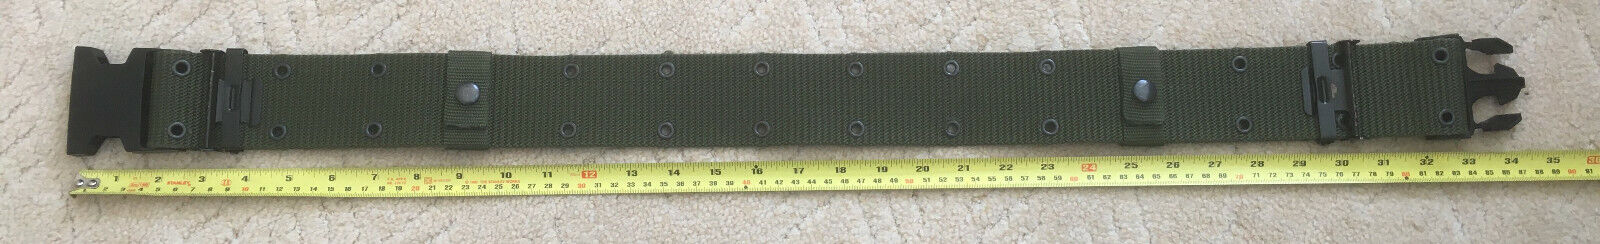 Military combat belt